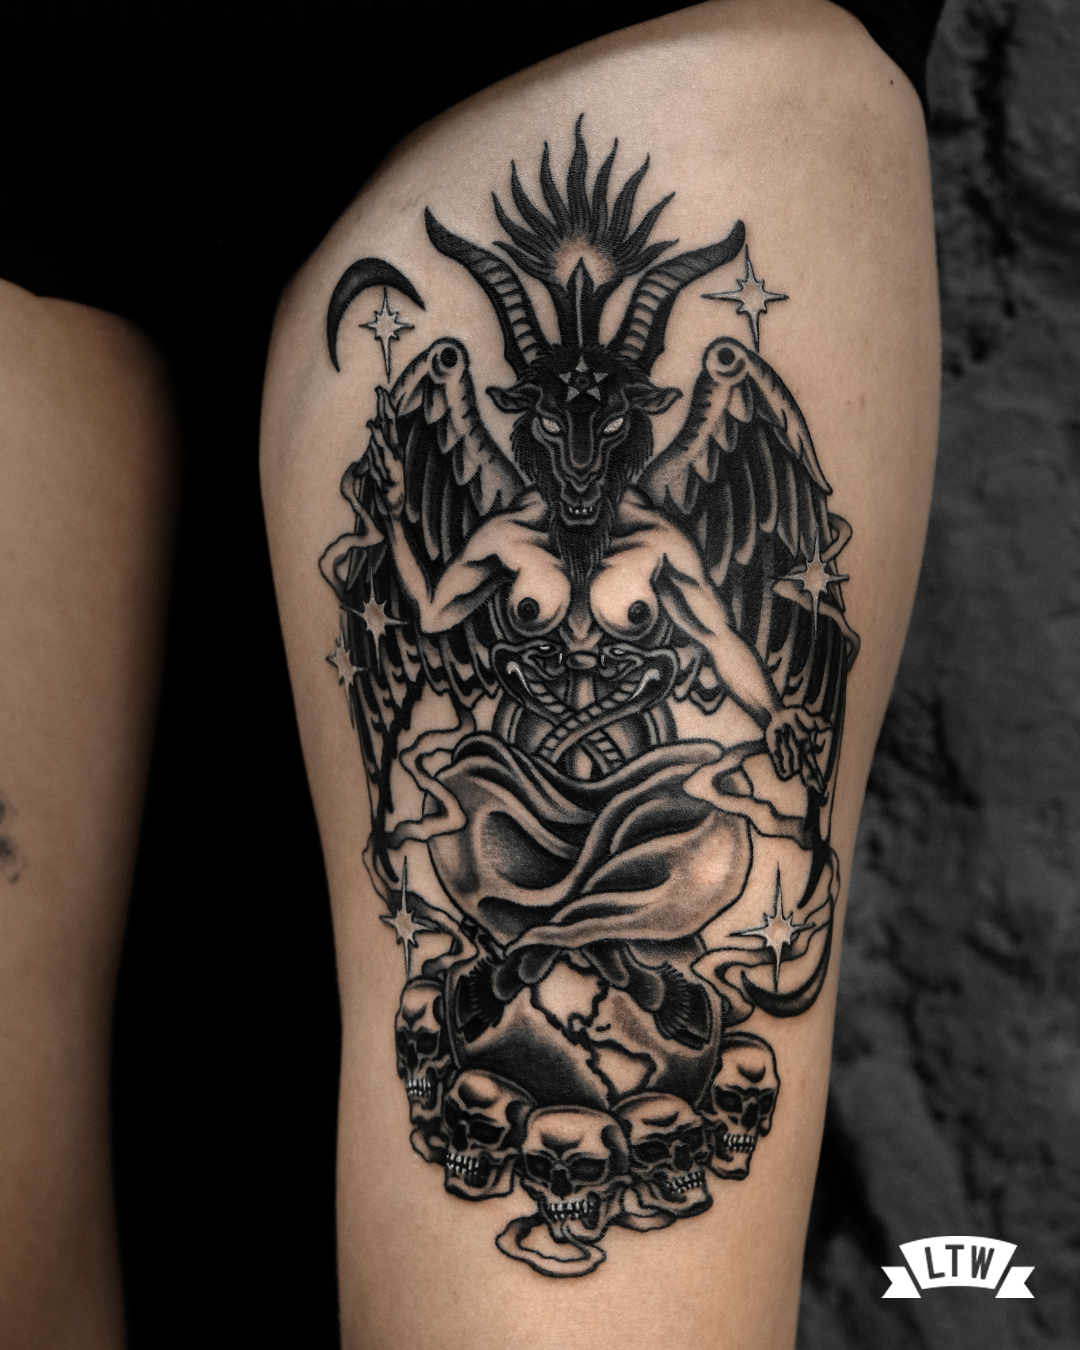 Black and white baphomet tattooed by Enol